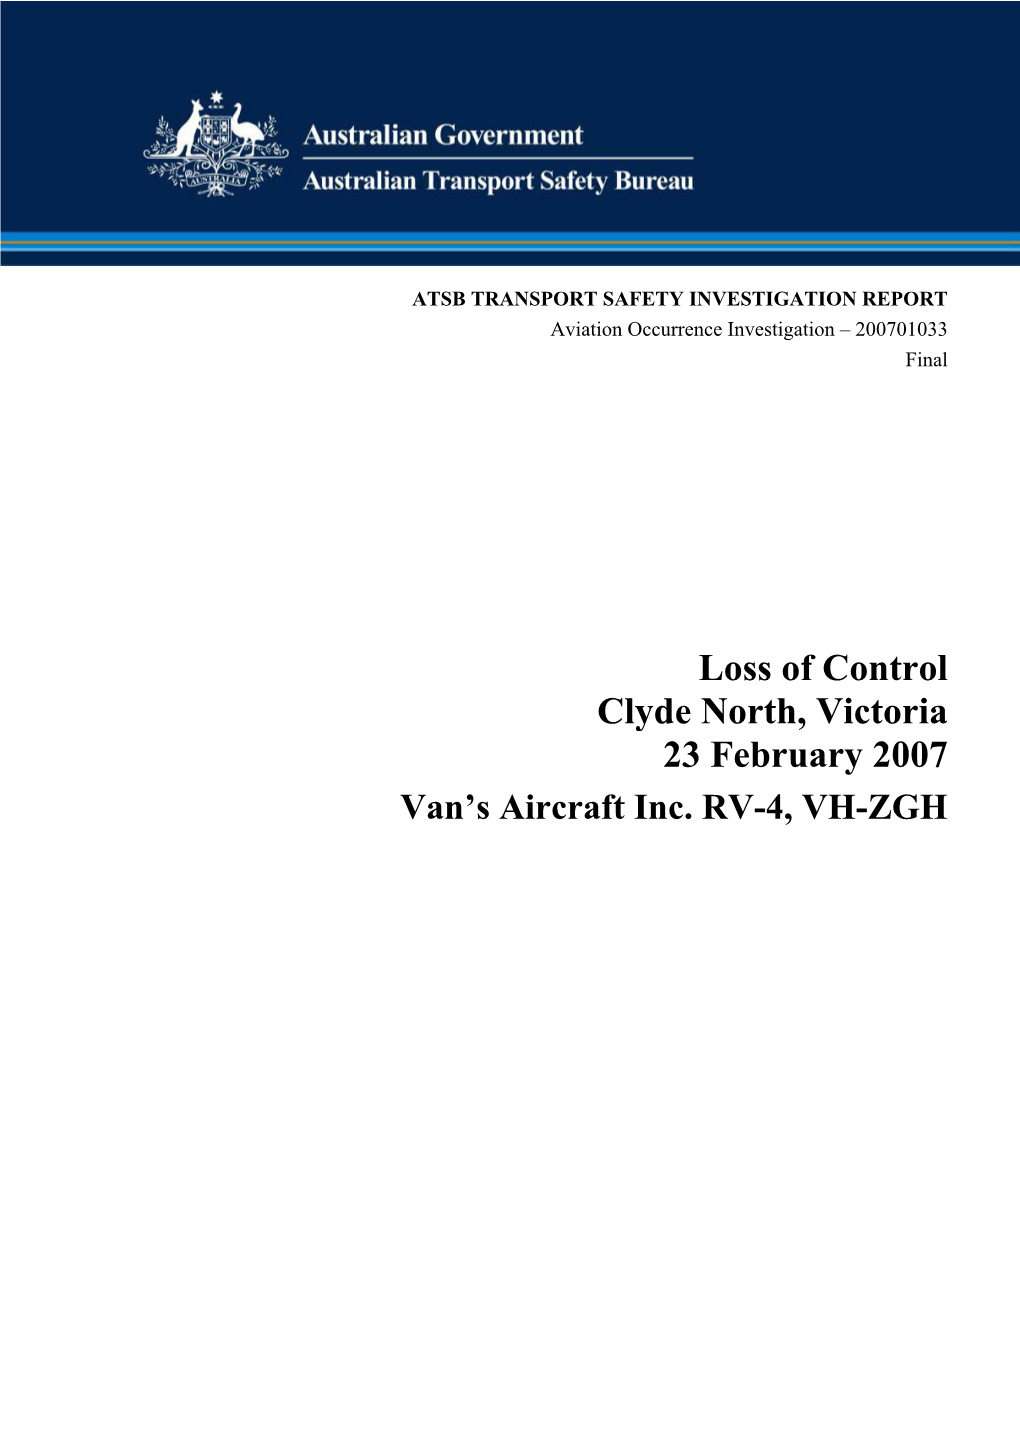 Loss of Control, Clyde North, Vic., 23 February 2007, Van's Aircraft Inc